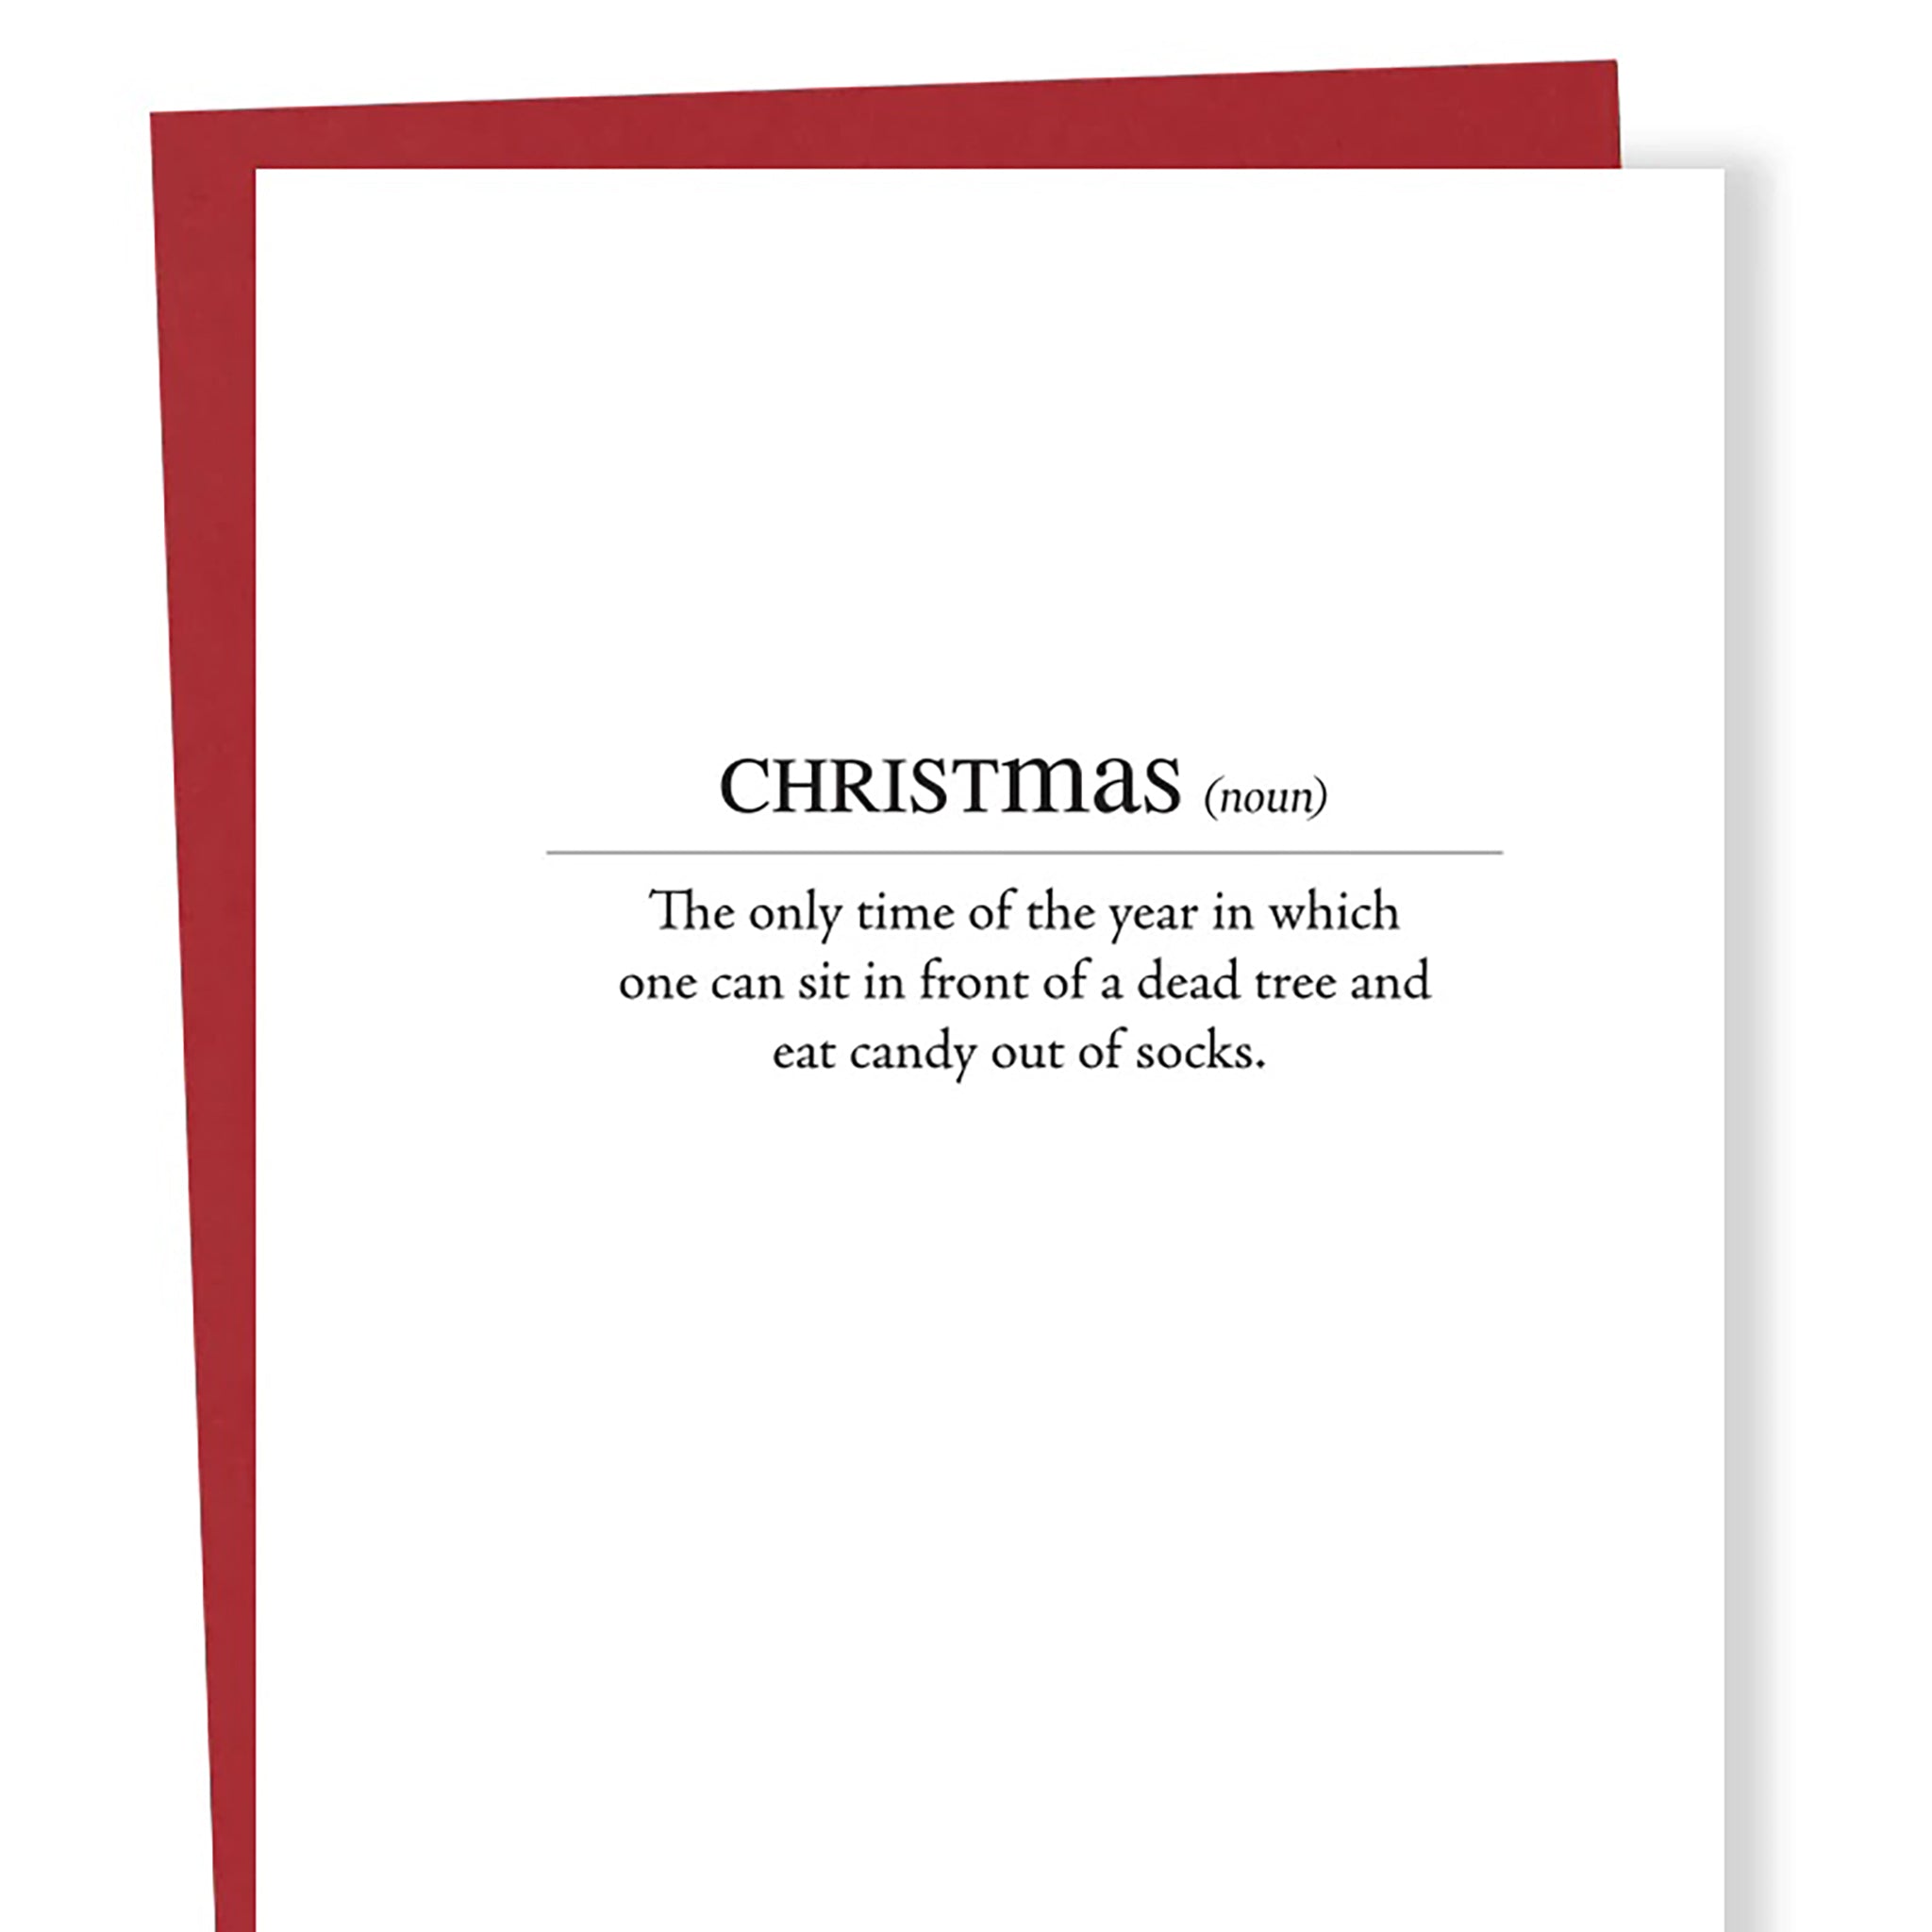 Christmas Definition Card